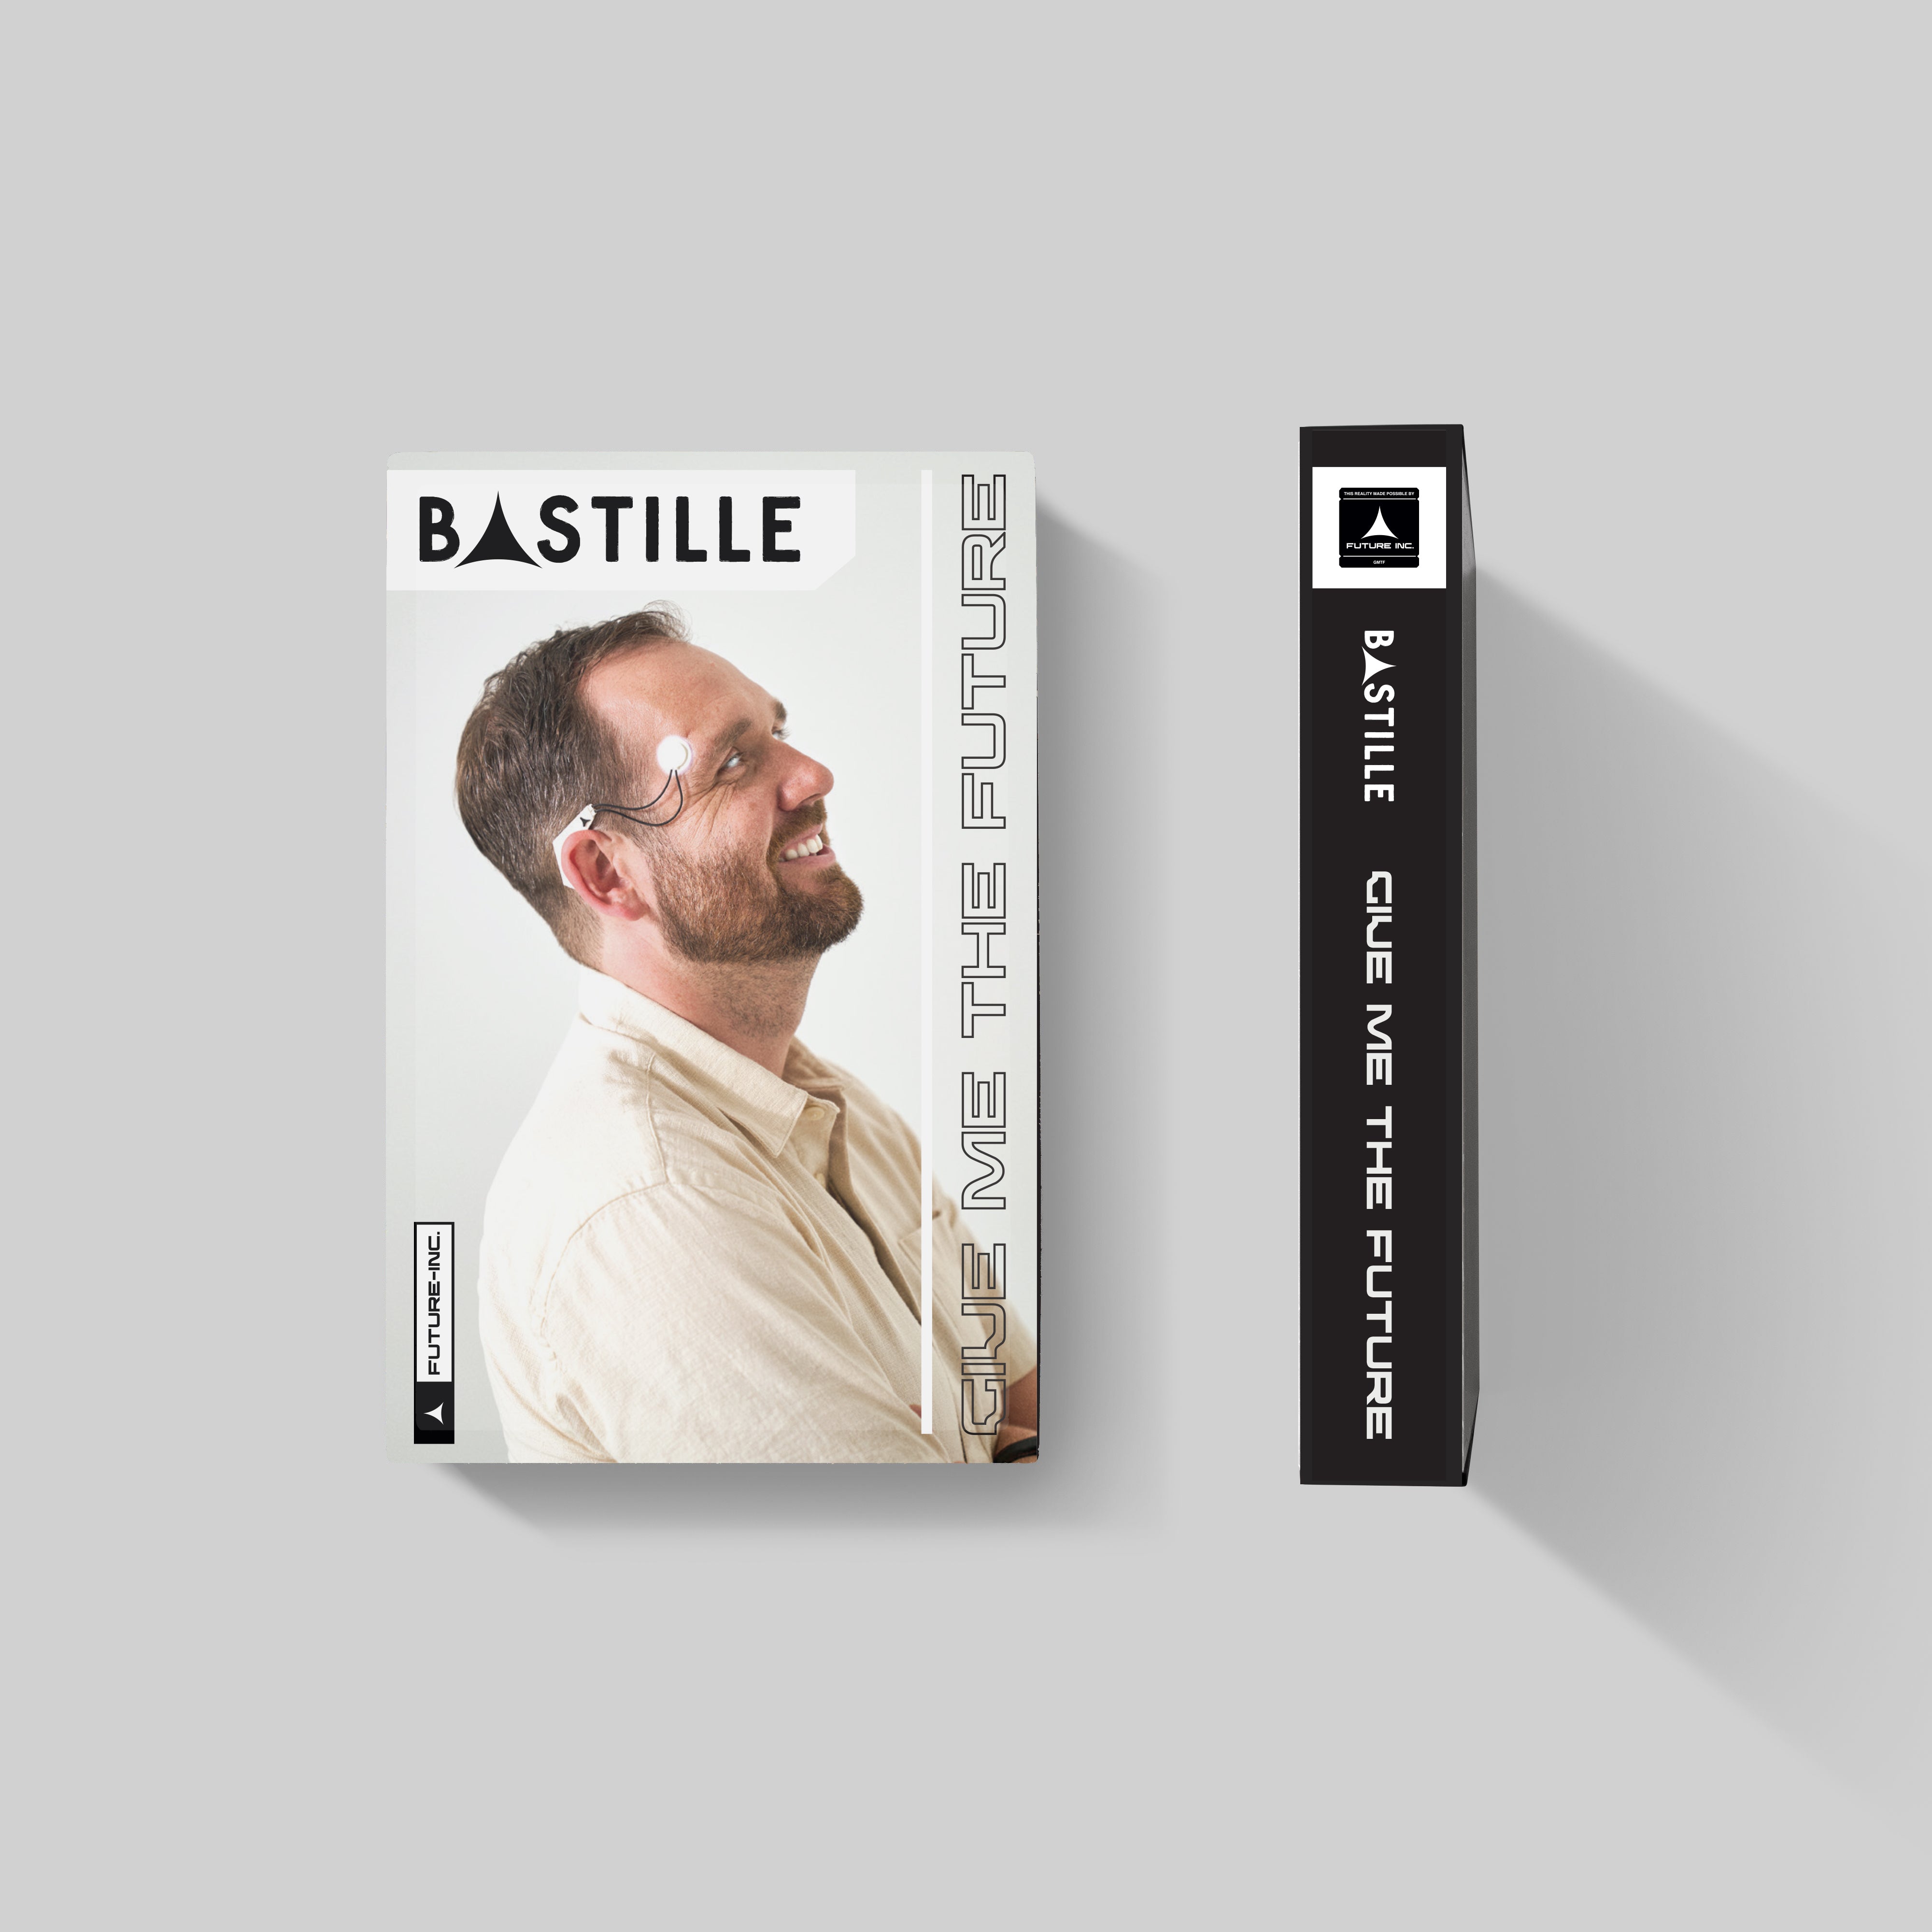 Bastille - Give Me The Future  - Will Cassette